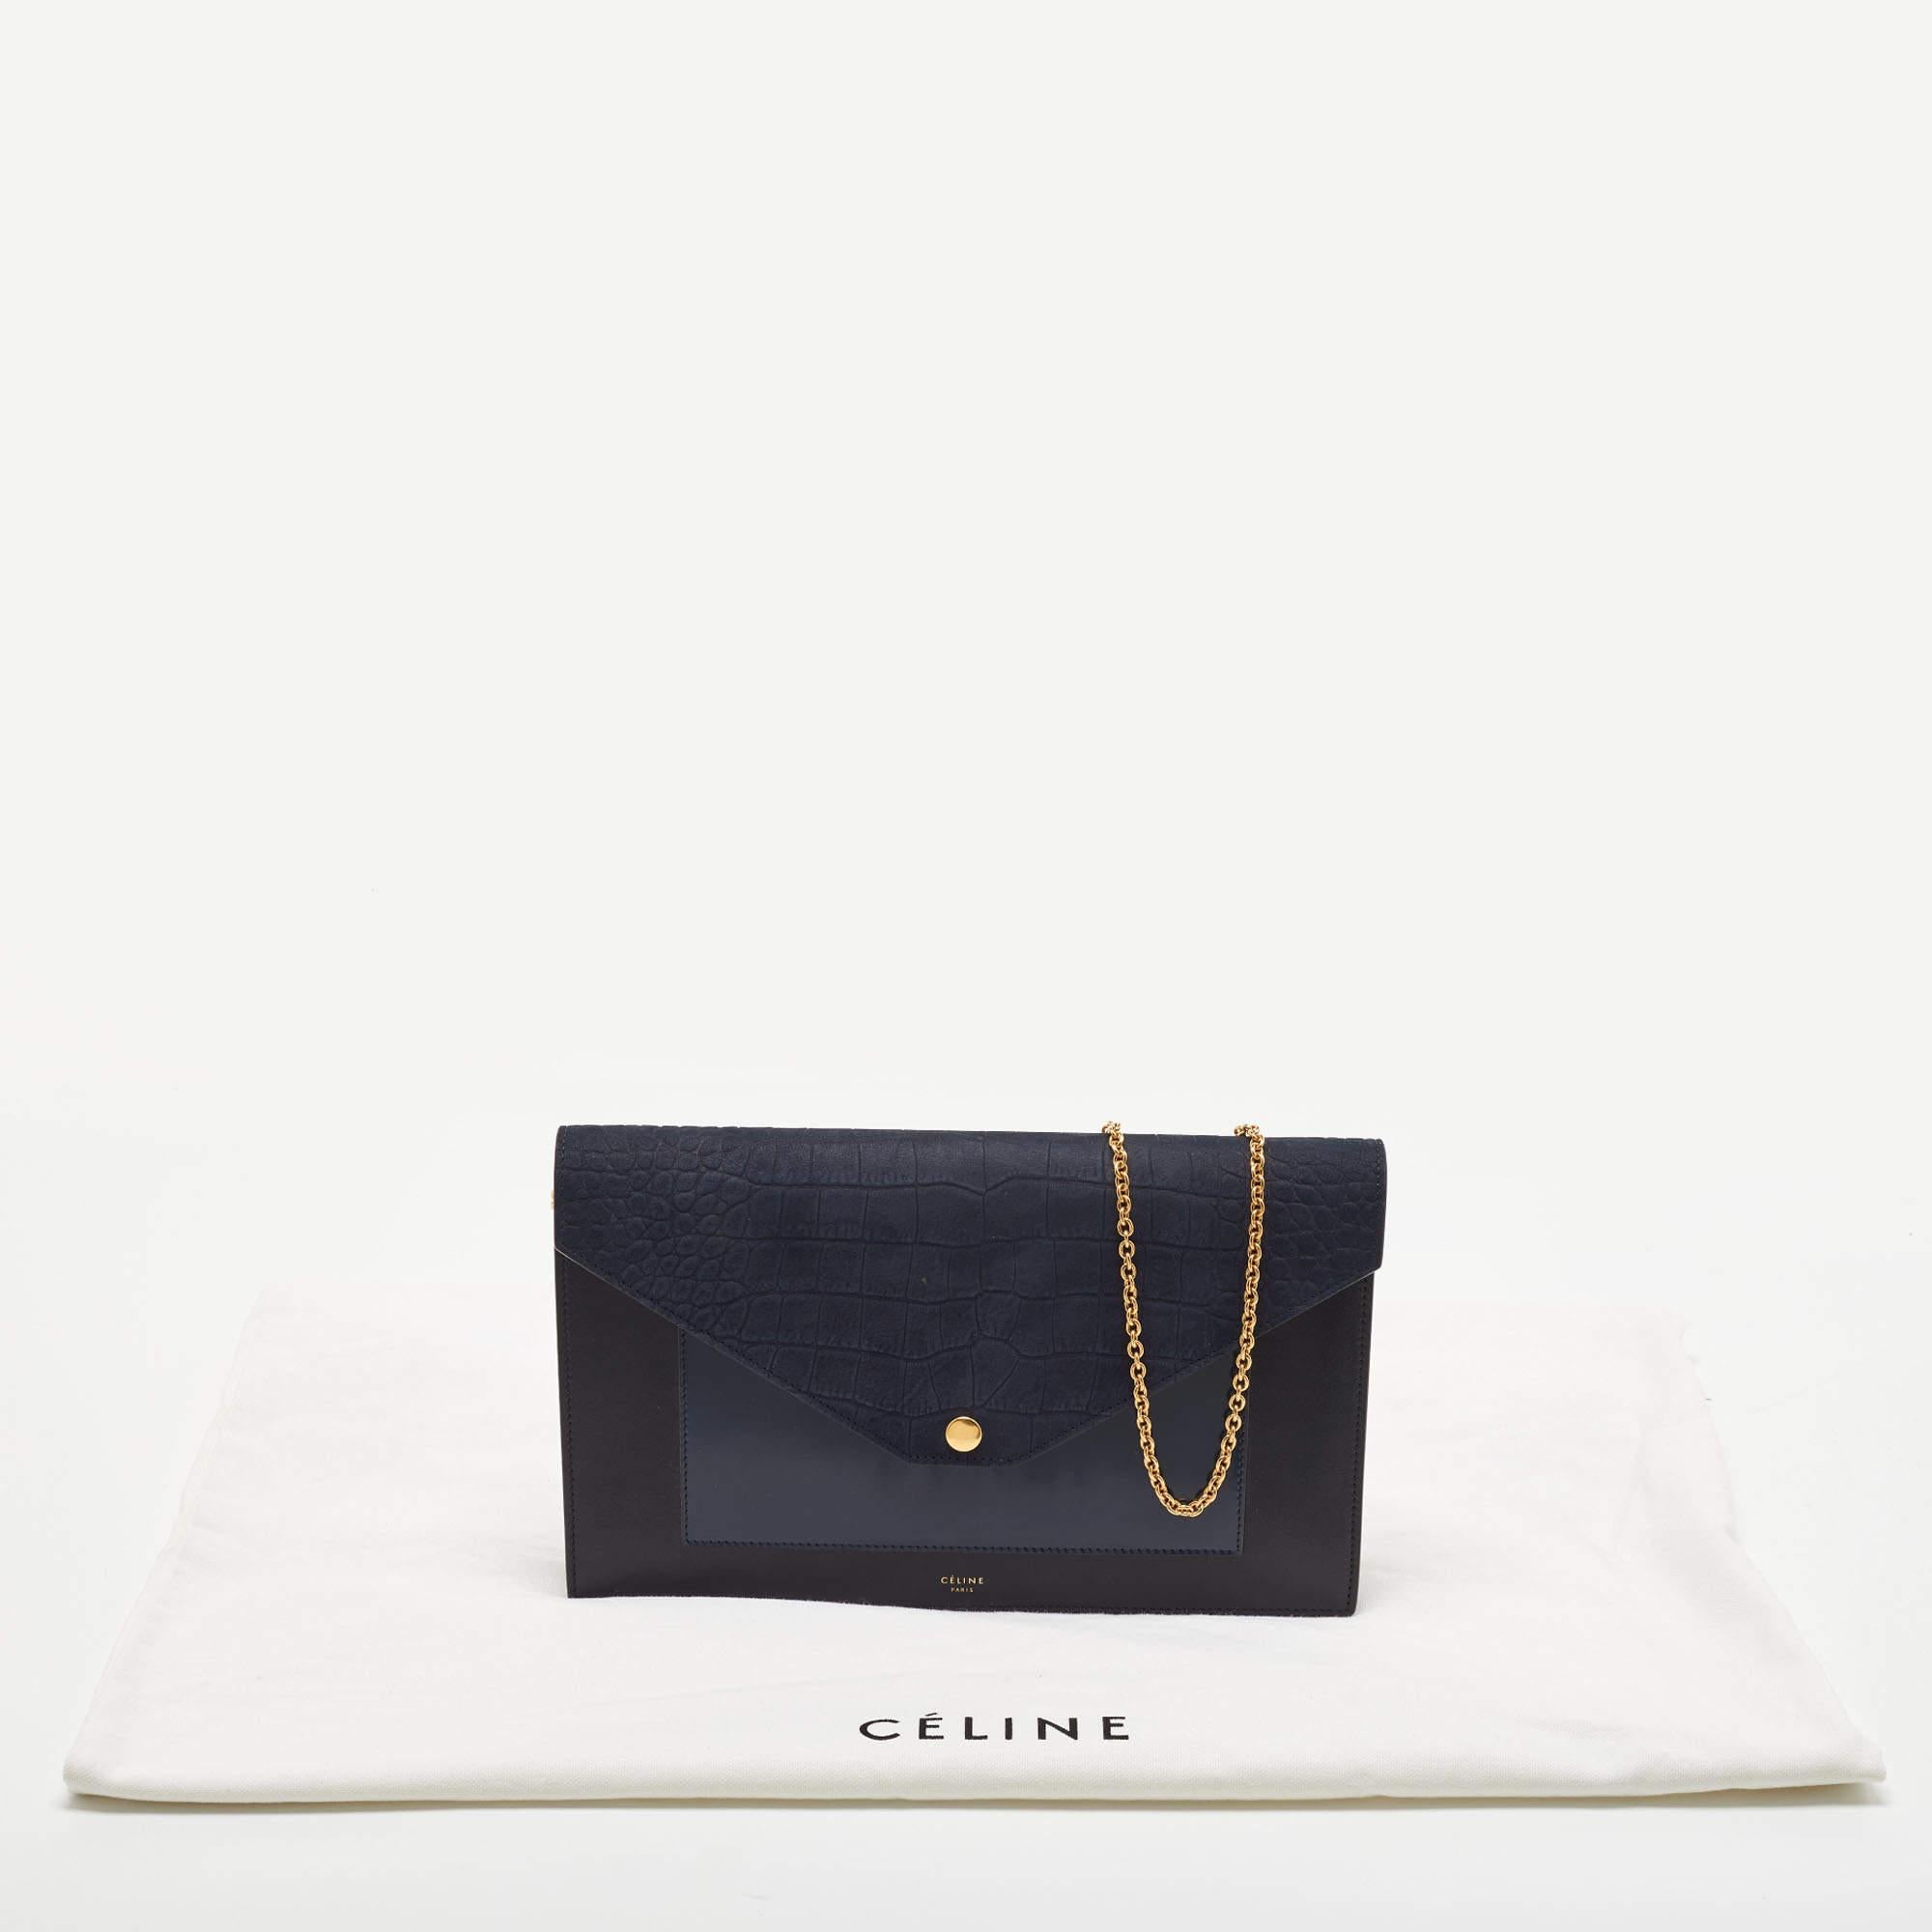 Celine Navy Blue/Black Croc Embossed and Leather Pocket Envelope Chain Clutch 8